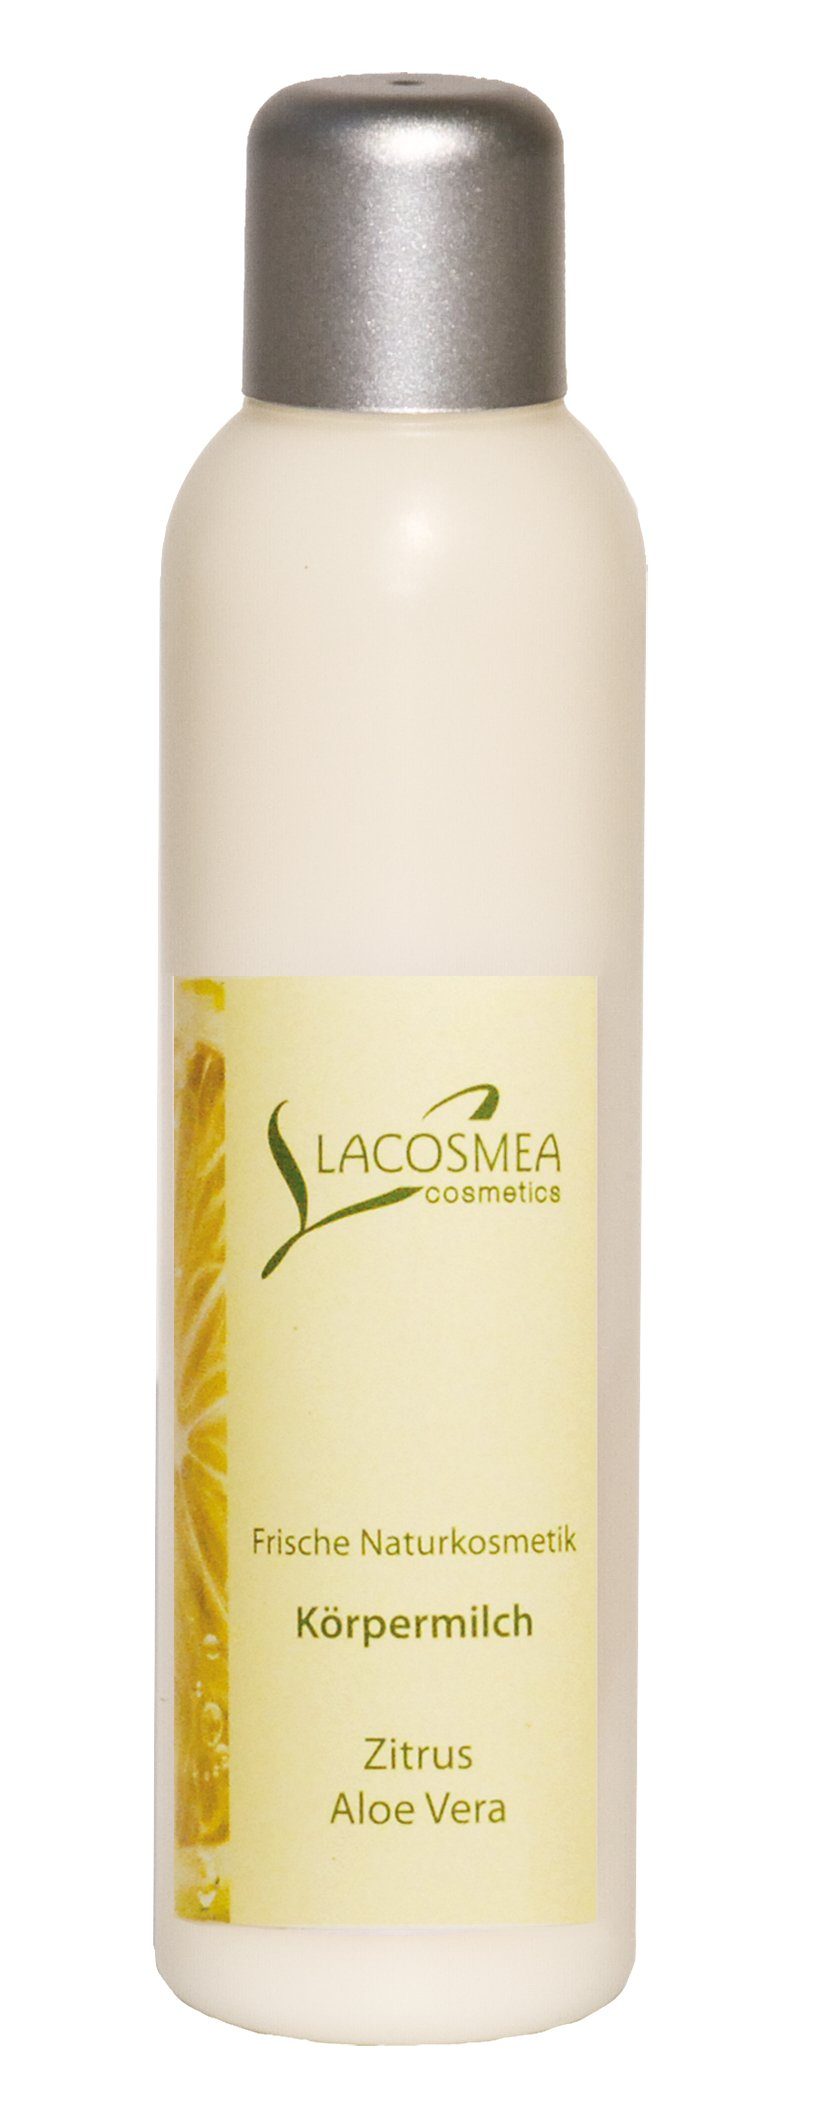 Zitrus Körpermilch Körpermilch / Vera Cosmetics Lacosmea Aloe